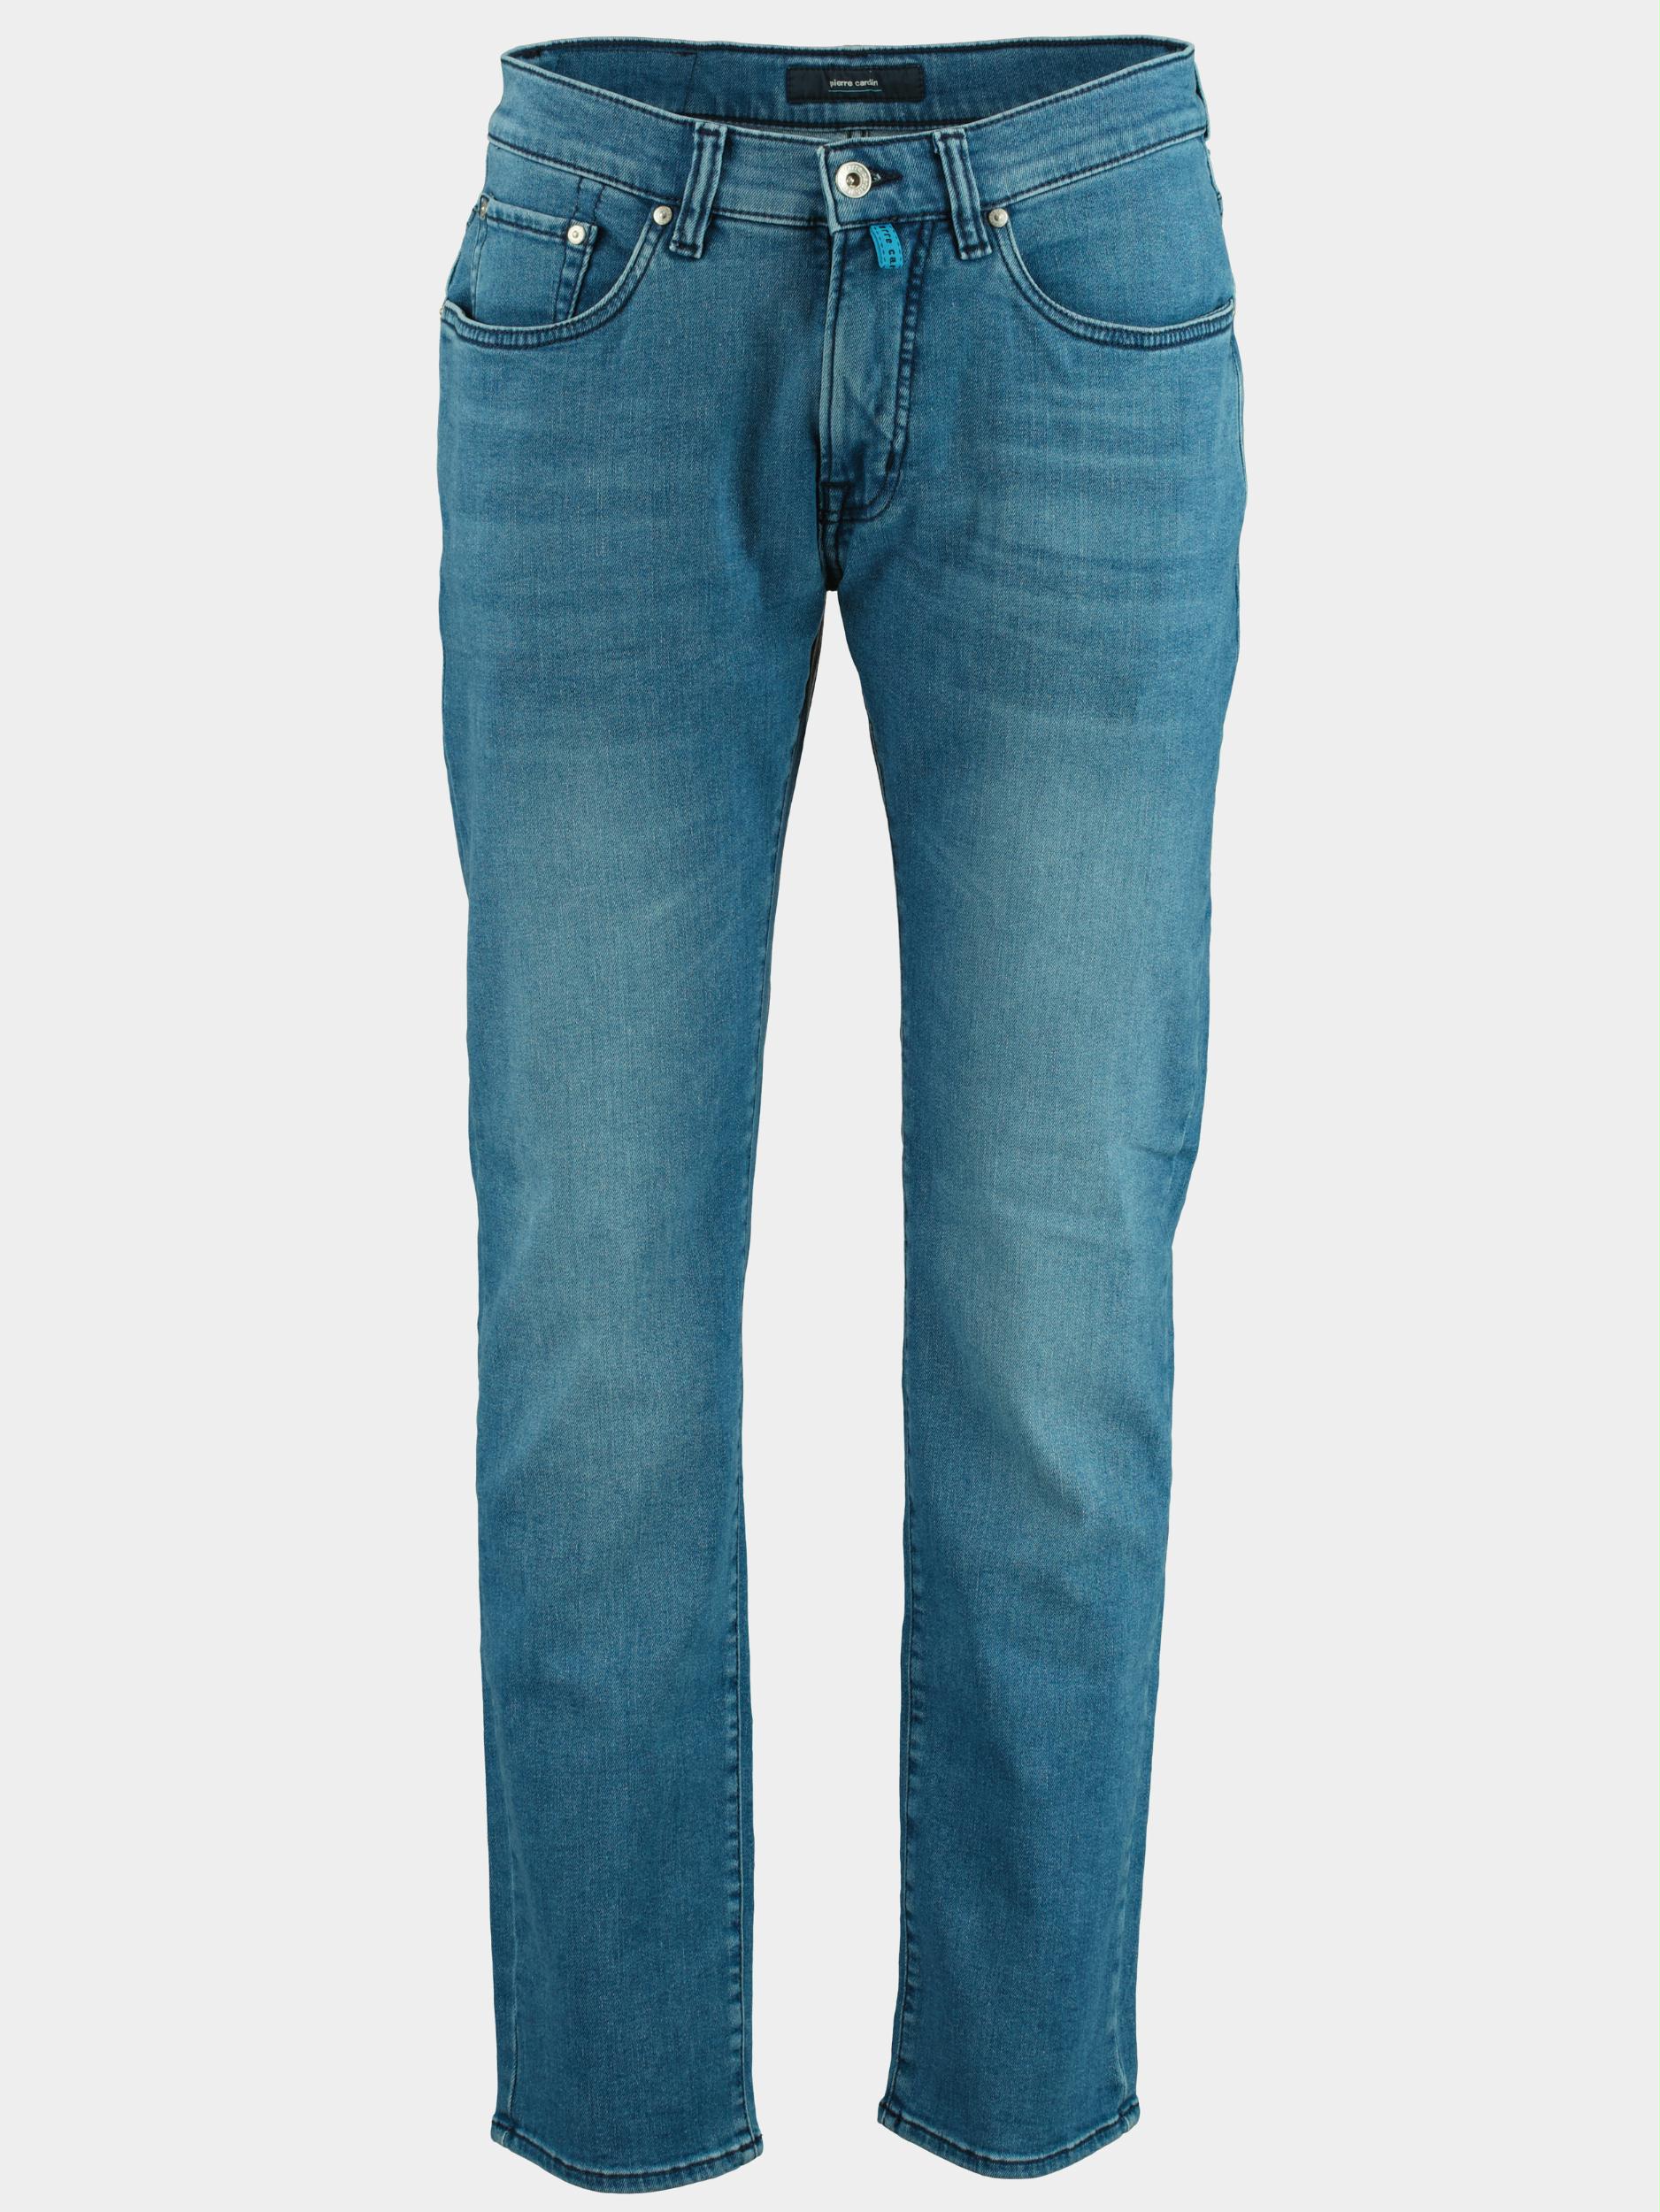 Pierre Cardin 5-Pocket Jeans Blauw slim fit jeans Antibes C7 30030.7715/6845